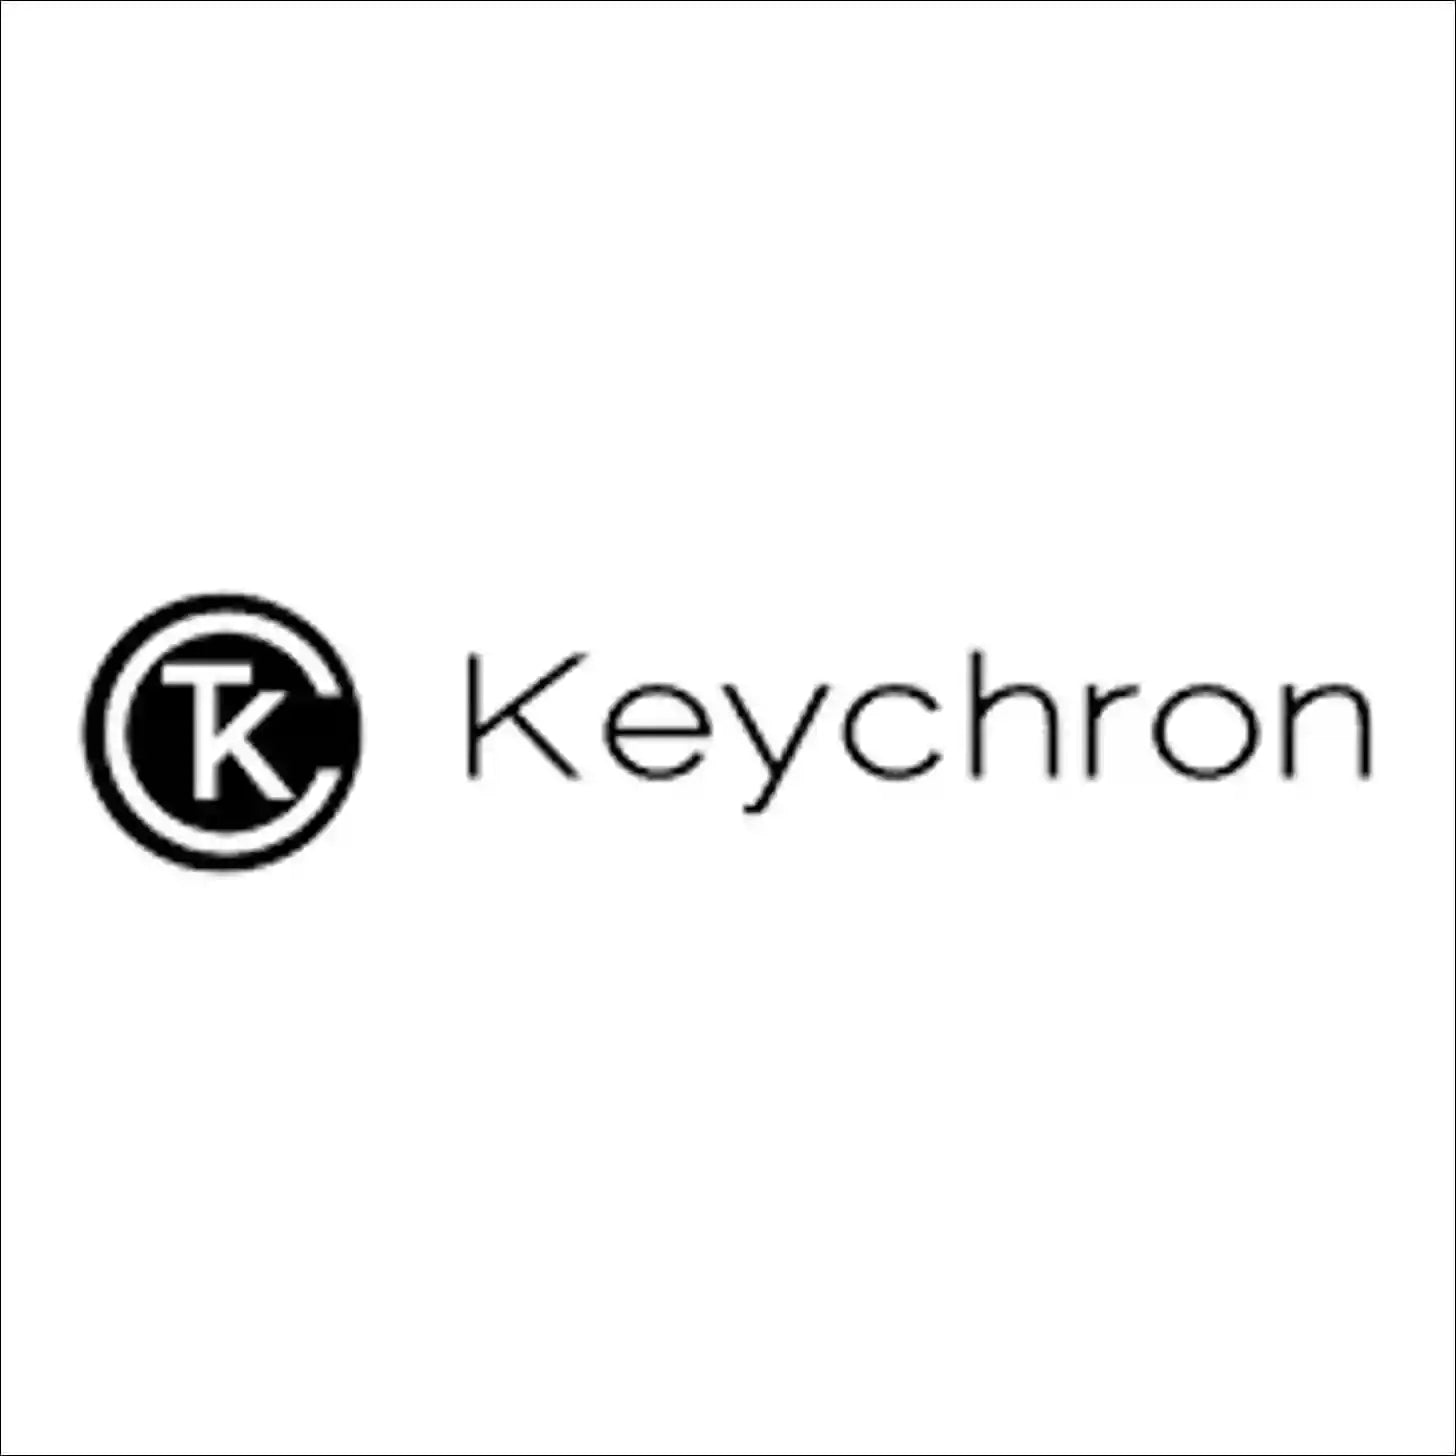 Keychron-logo-collection-image-of-sa-lot-bands-selling (6)